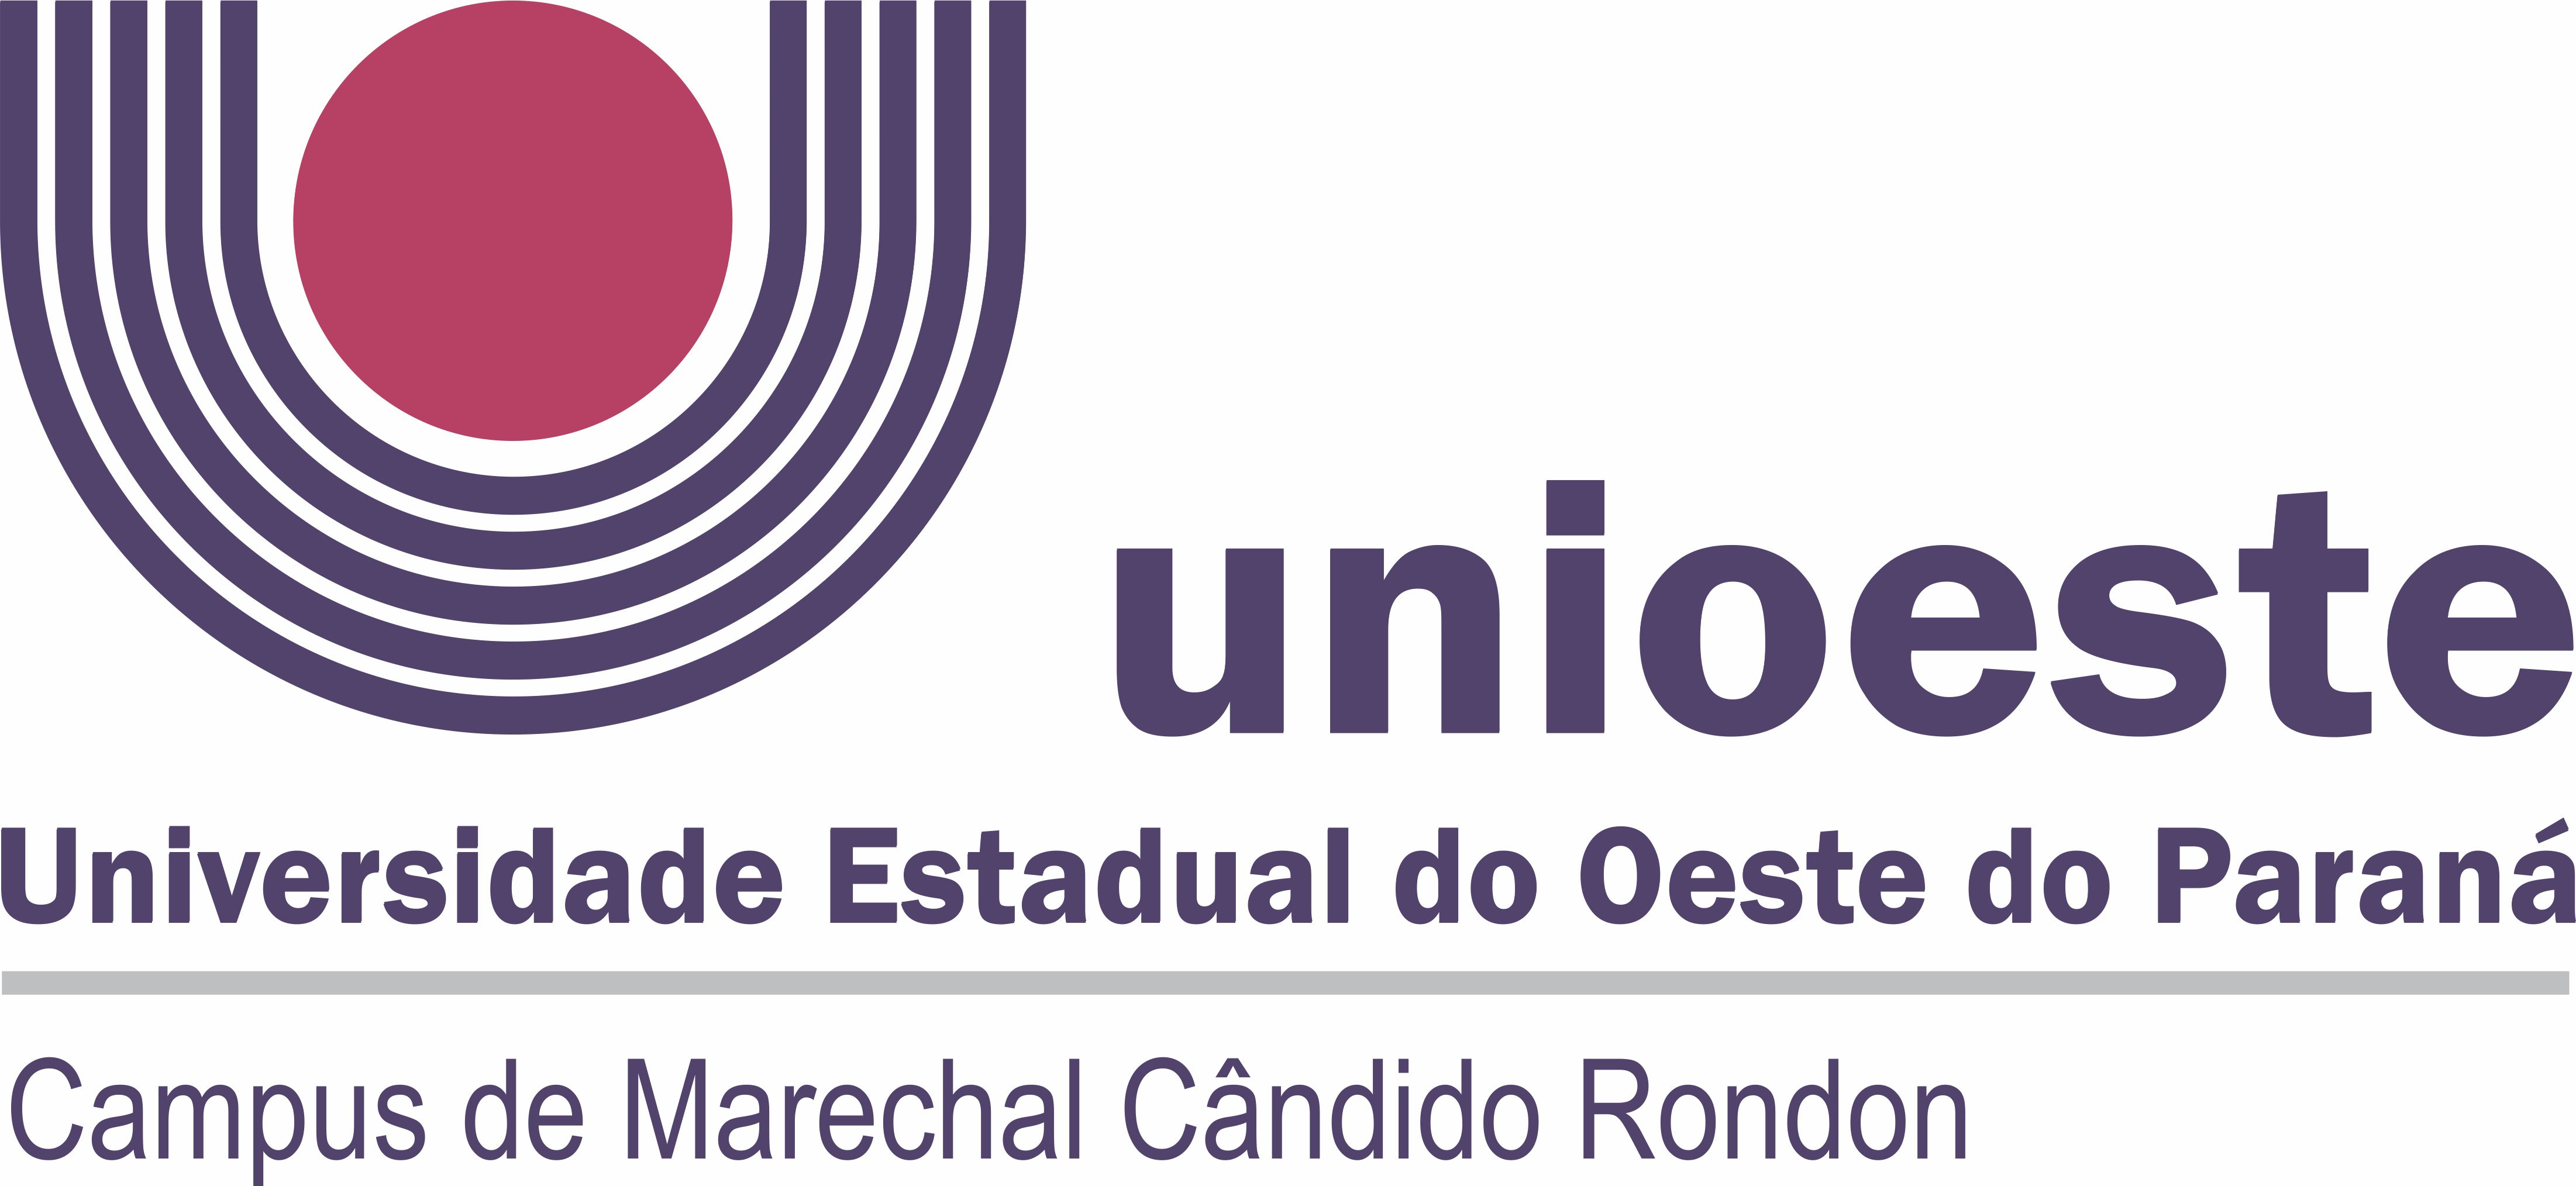 Logotipo Unioeste Mal.C.Rondon